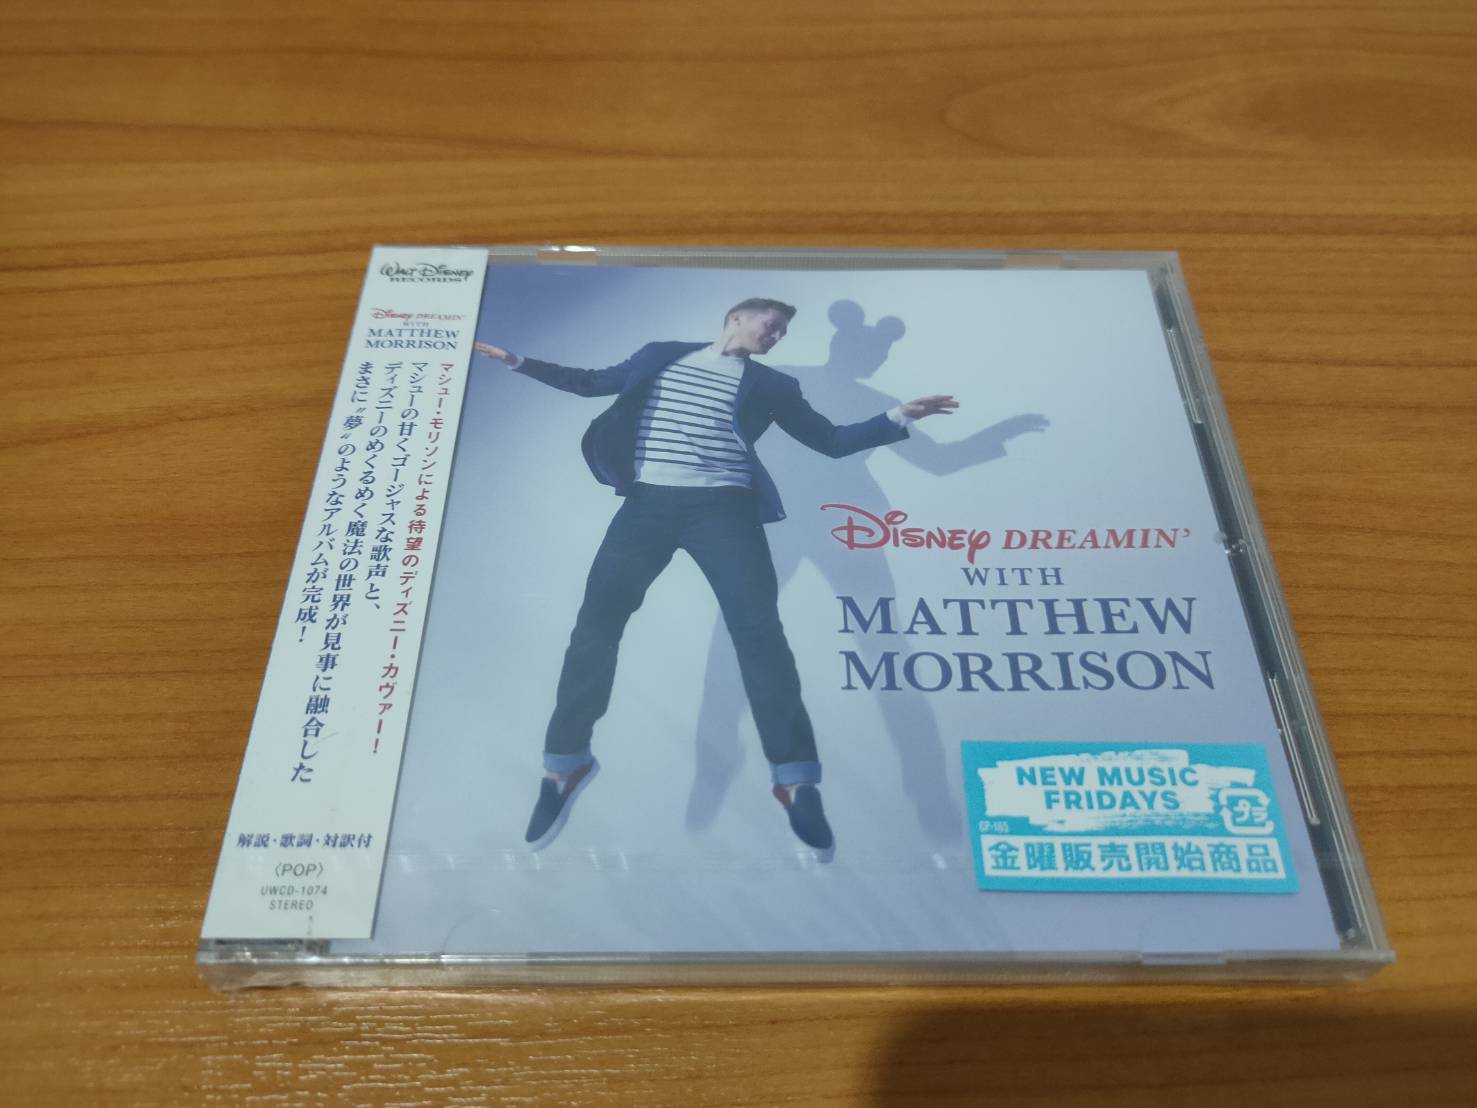 CD.MUSIC ซีดีเพลง เพลงสากล  Disney Dreamin With Matthew Morrison ***โปรดดูภาพสินค้าอย่างละเอียดก่อนทำการสั่งซื้อ***